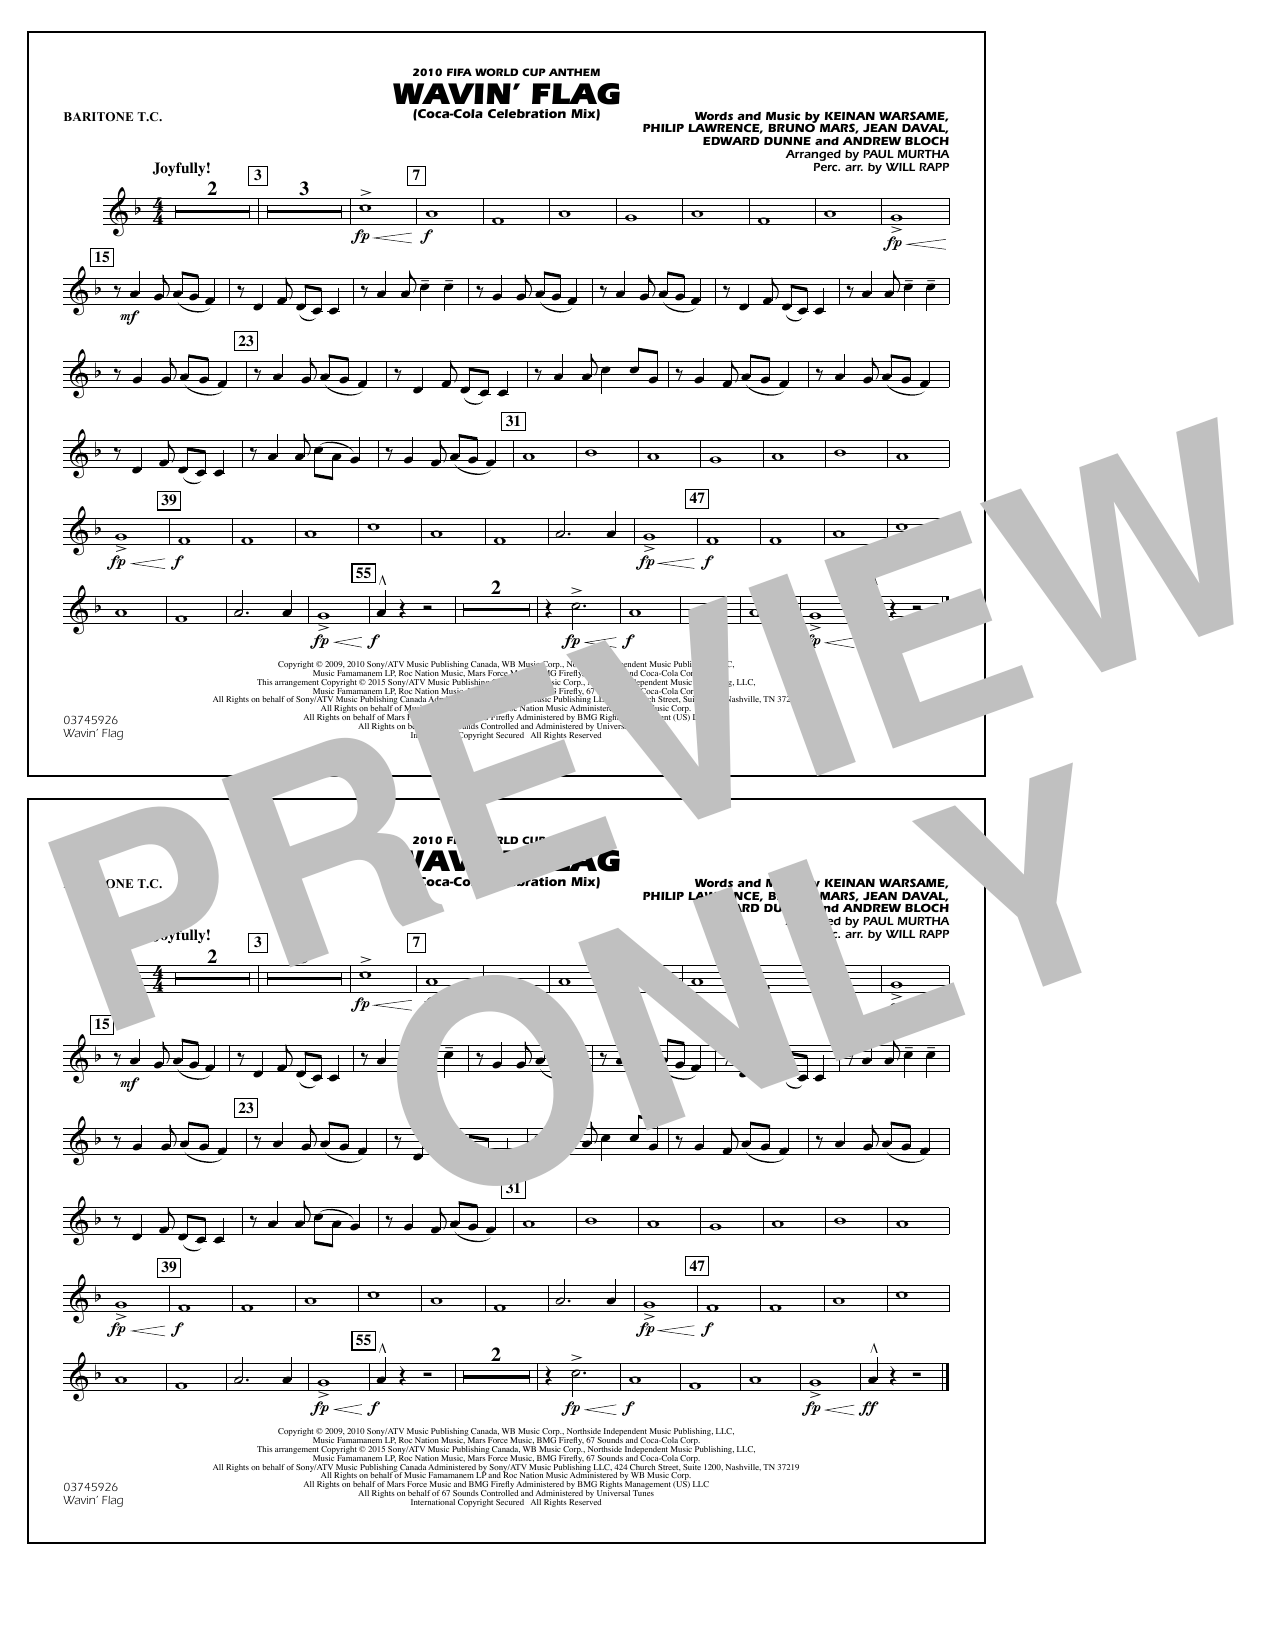 Paul Murtha Wavin' Flag - Baritone T.C. Sheet Music Notes & Chords for Marching Band - Download or Print PDF